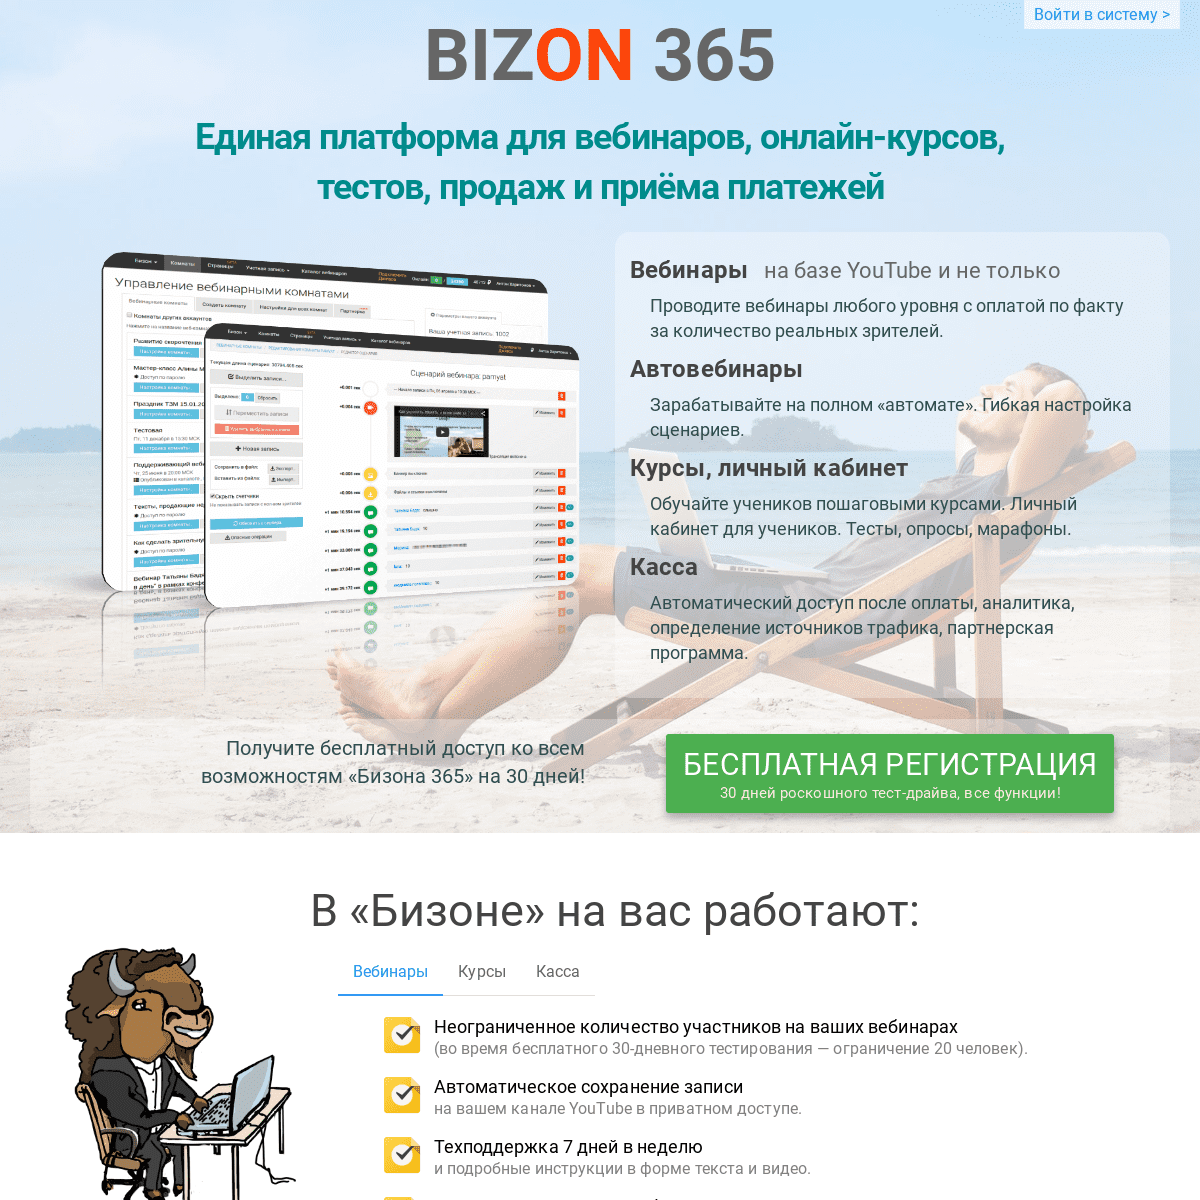 A complete backup of https://bizon365.ru